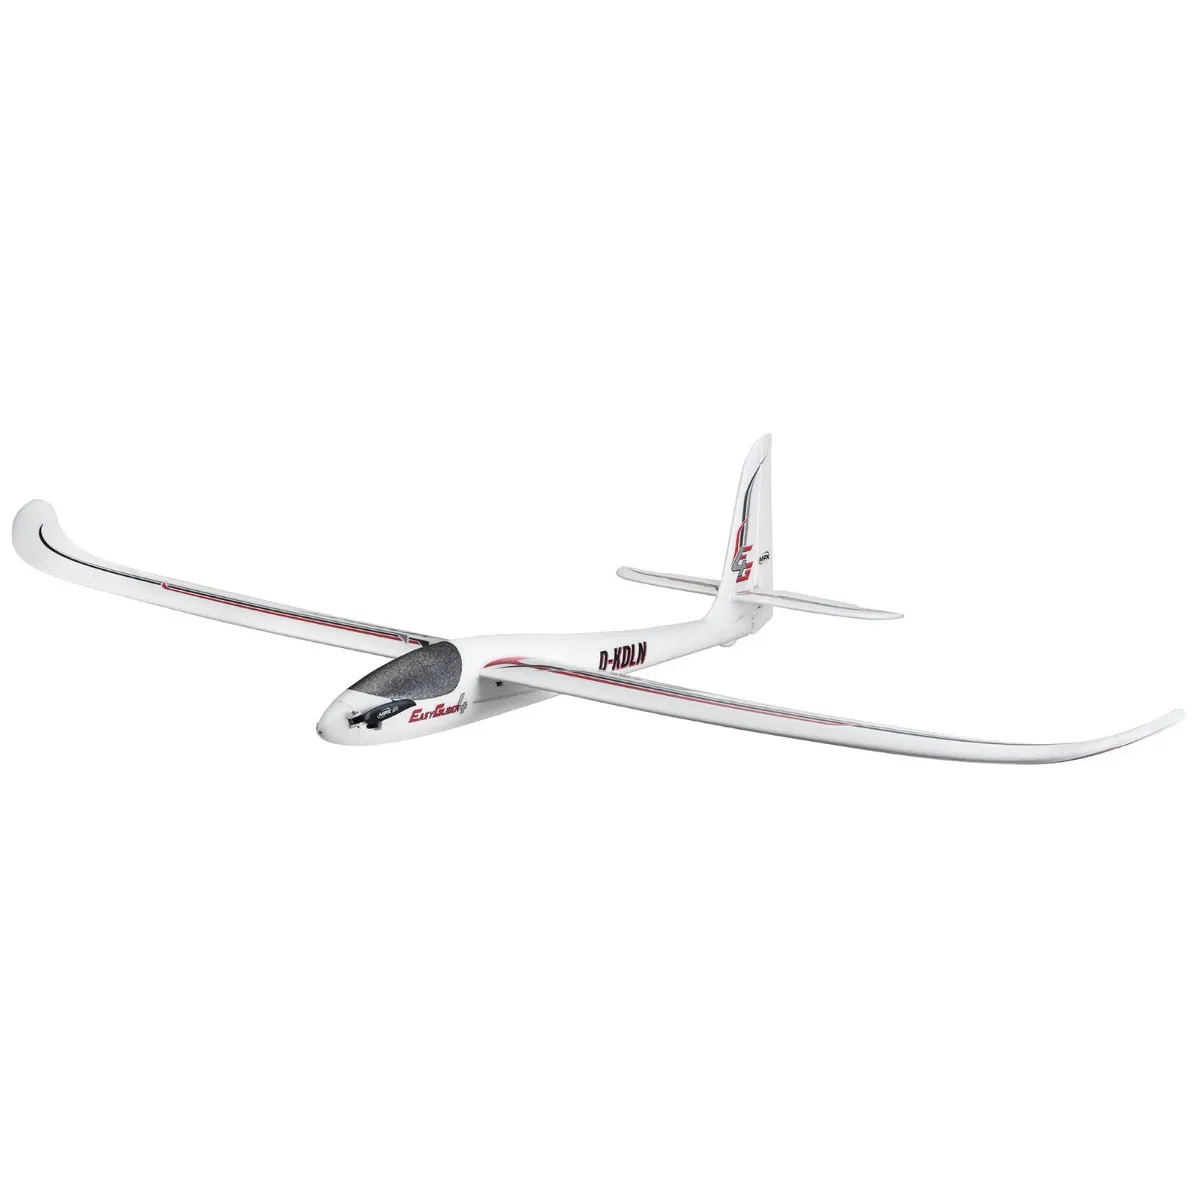 Multiplex Easy Glider 4 RC Plane, Receiver Ready, MPX1-02828